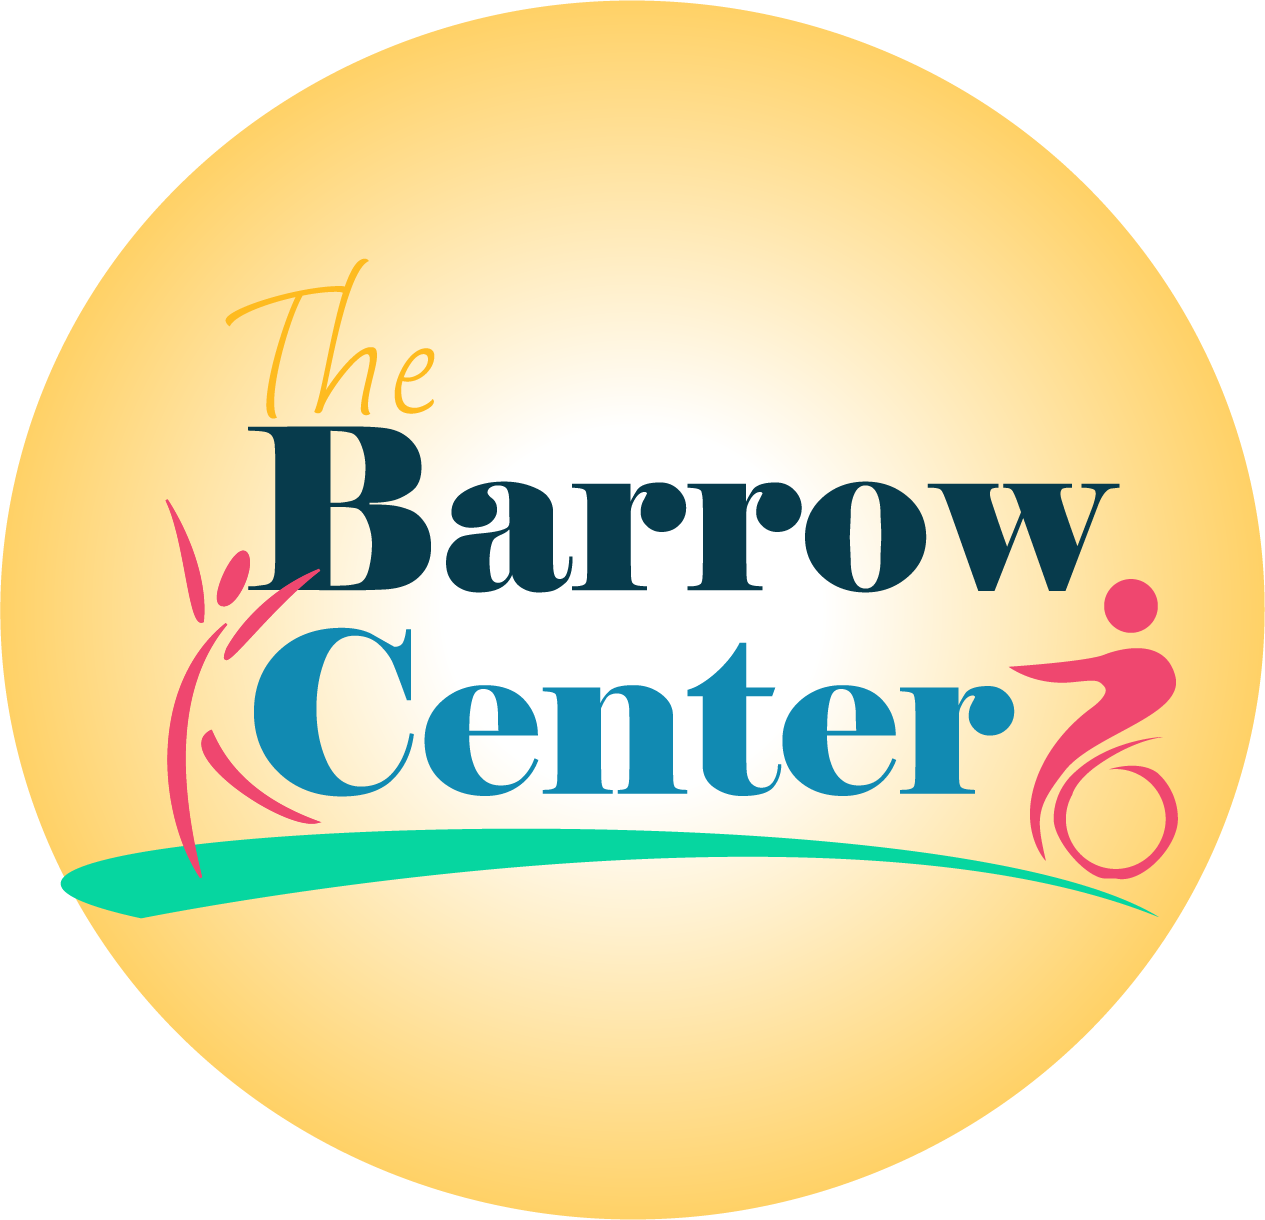 The Barrow Center